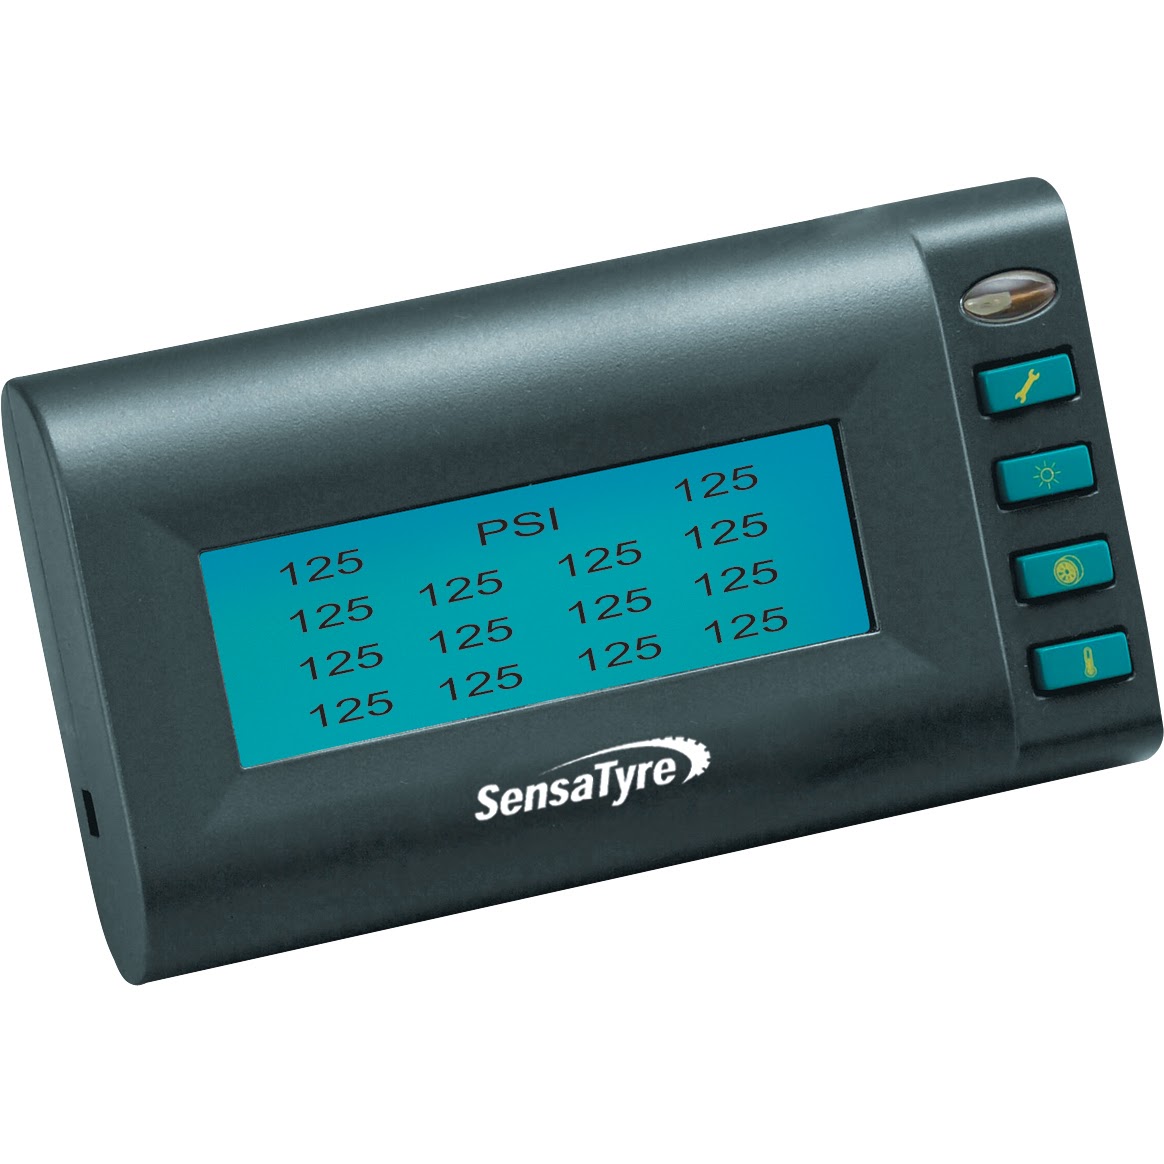 SensaTyre Pressure Monitoring System